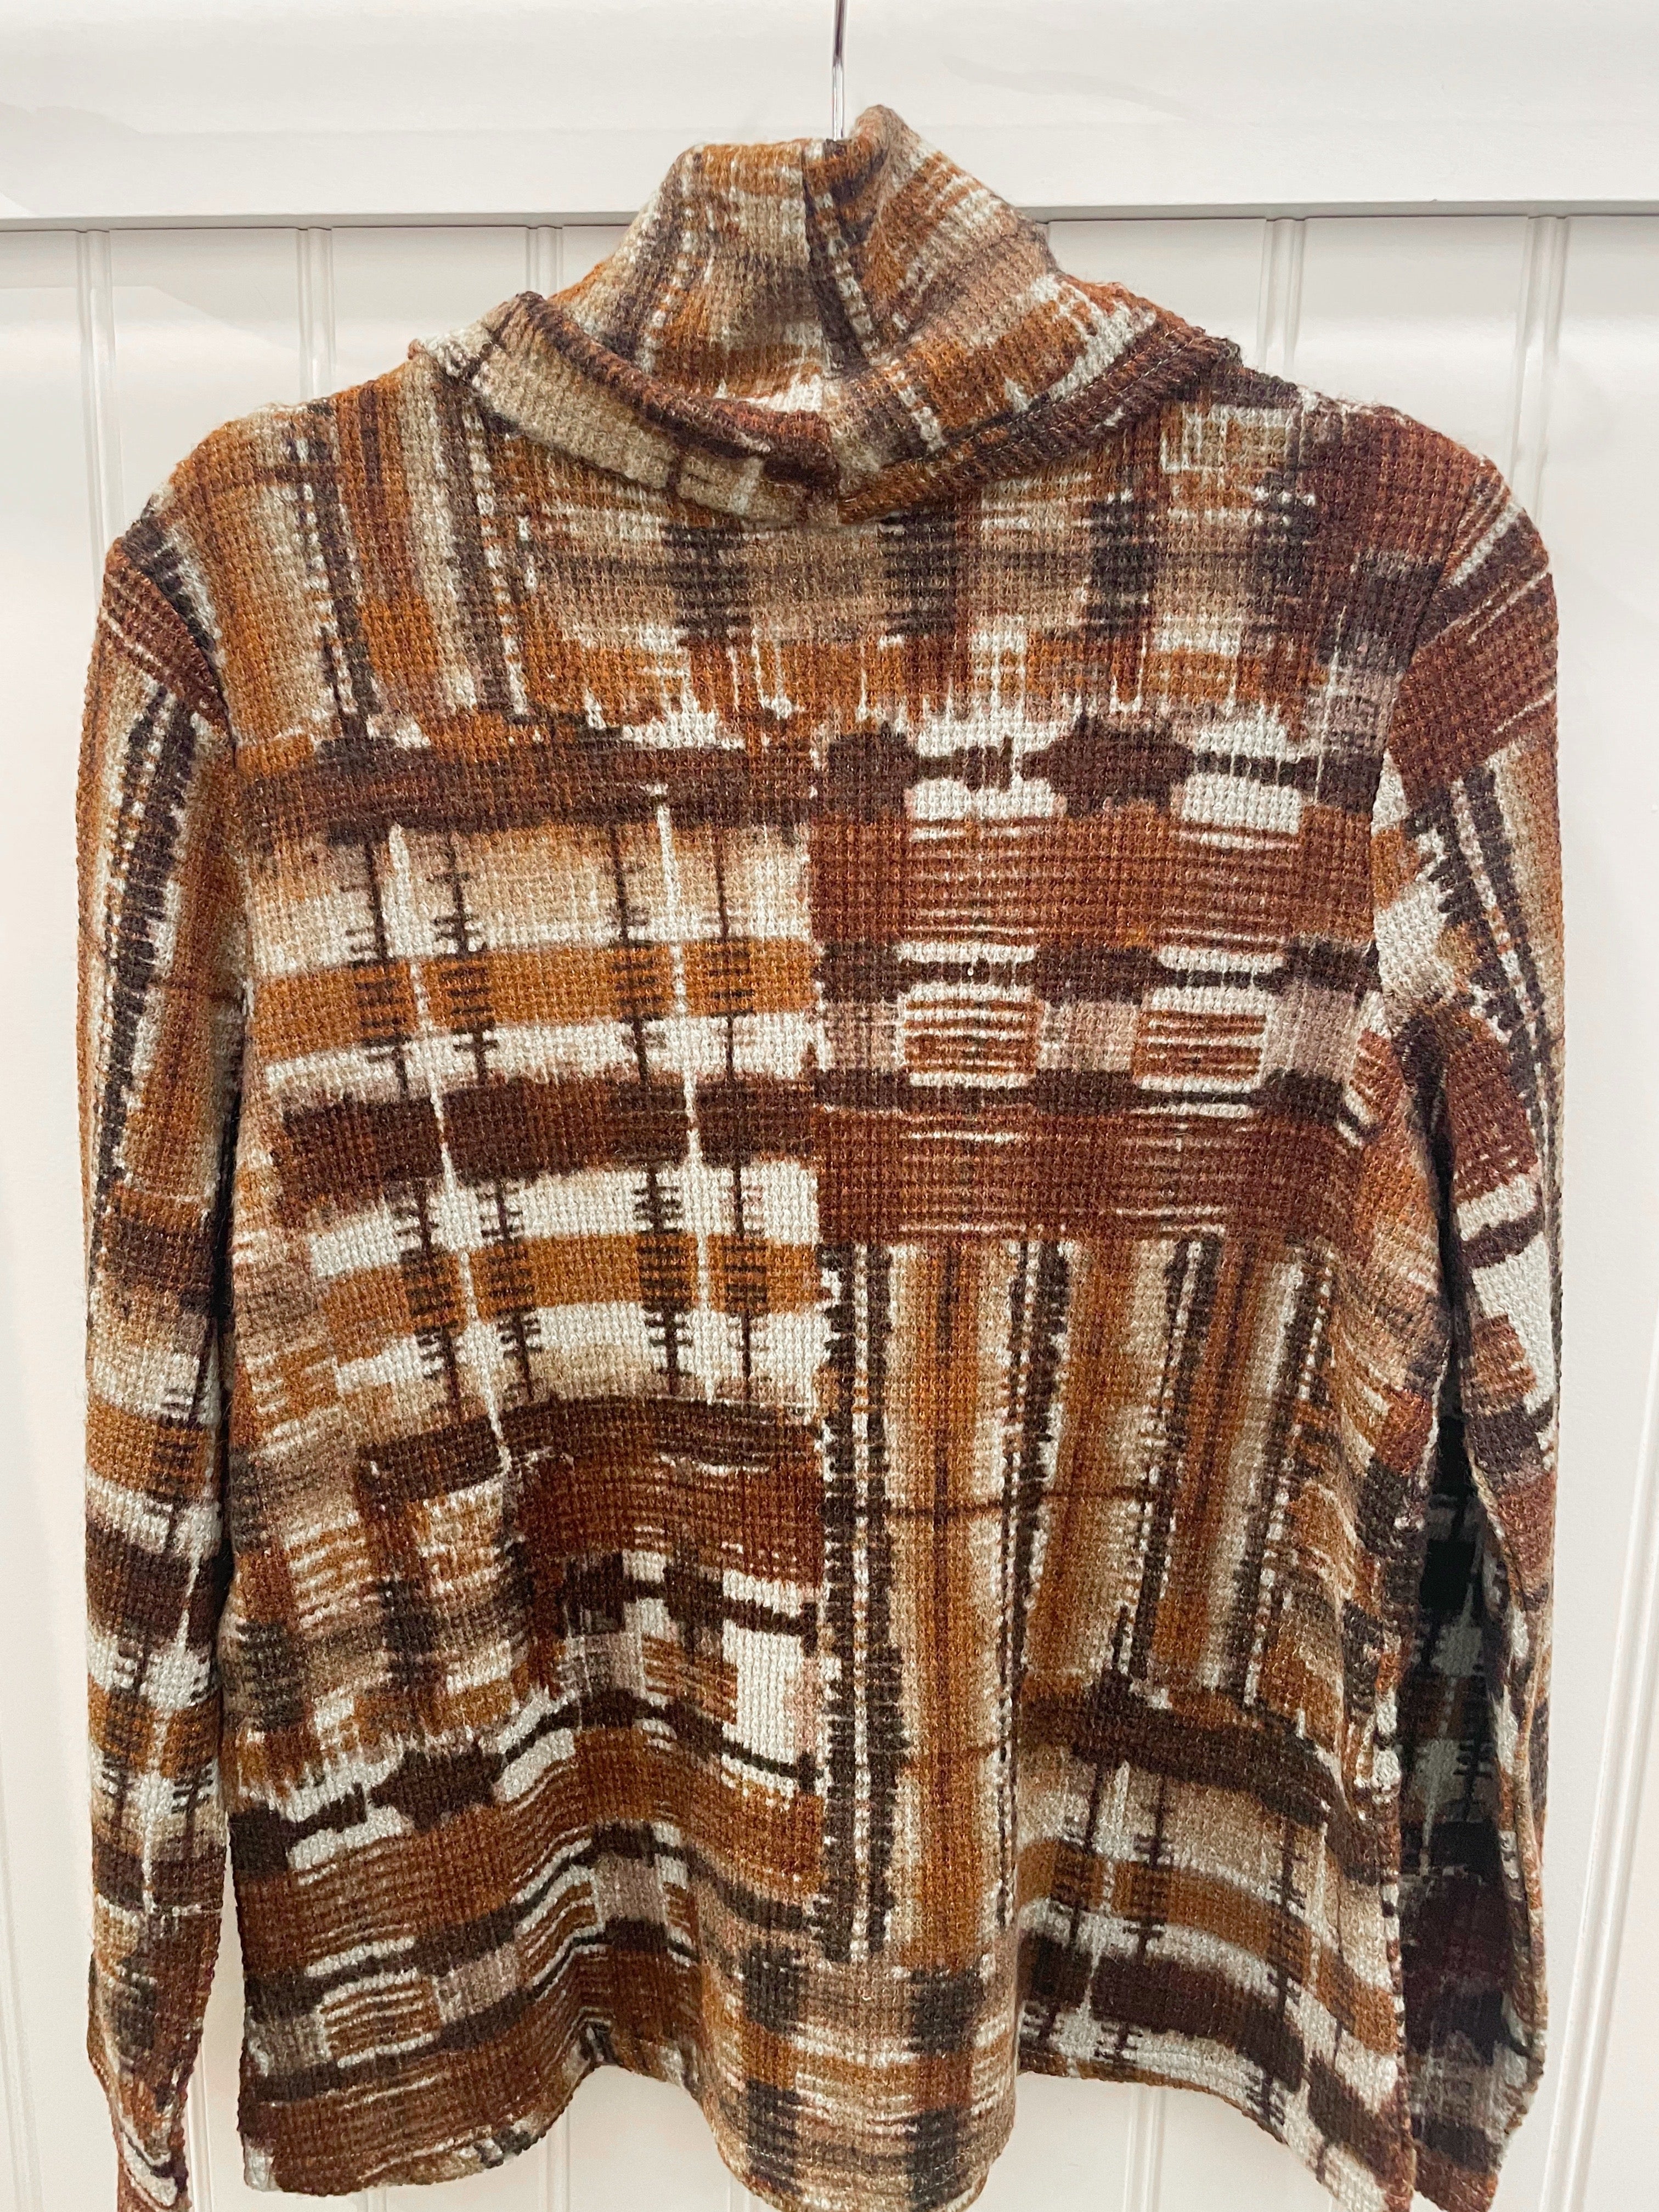 Mirage Cowl Sweater - FINAL SALE